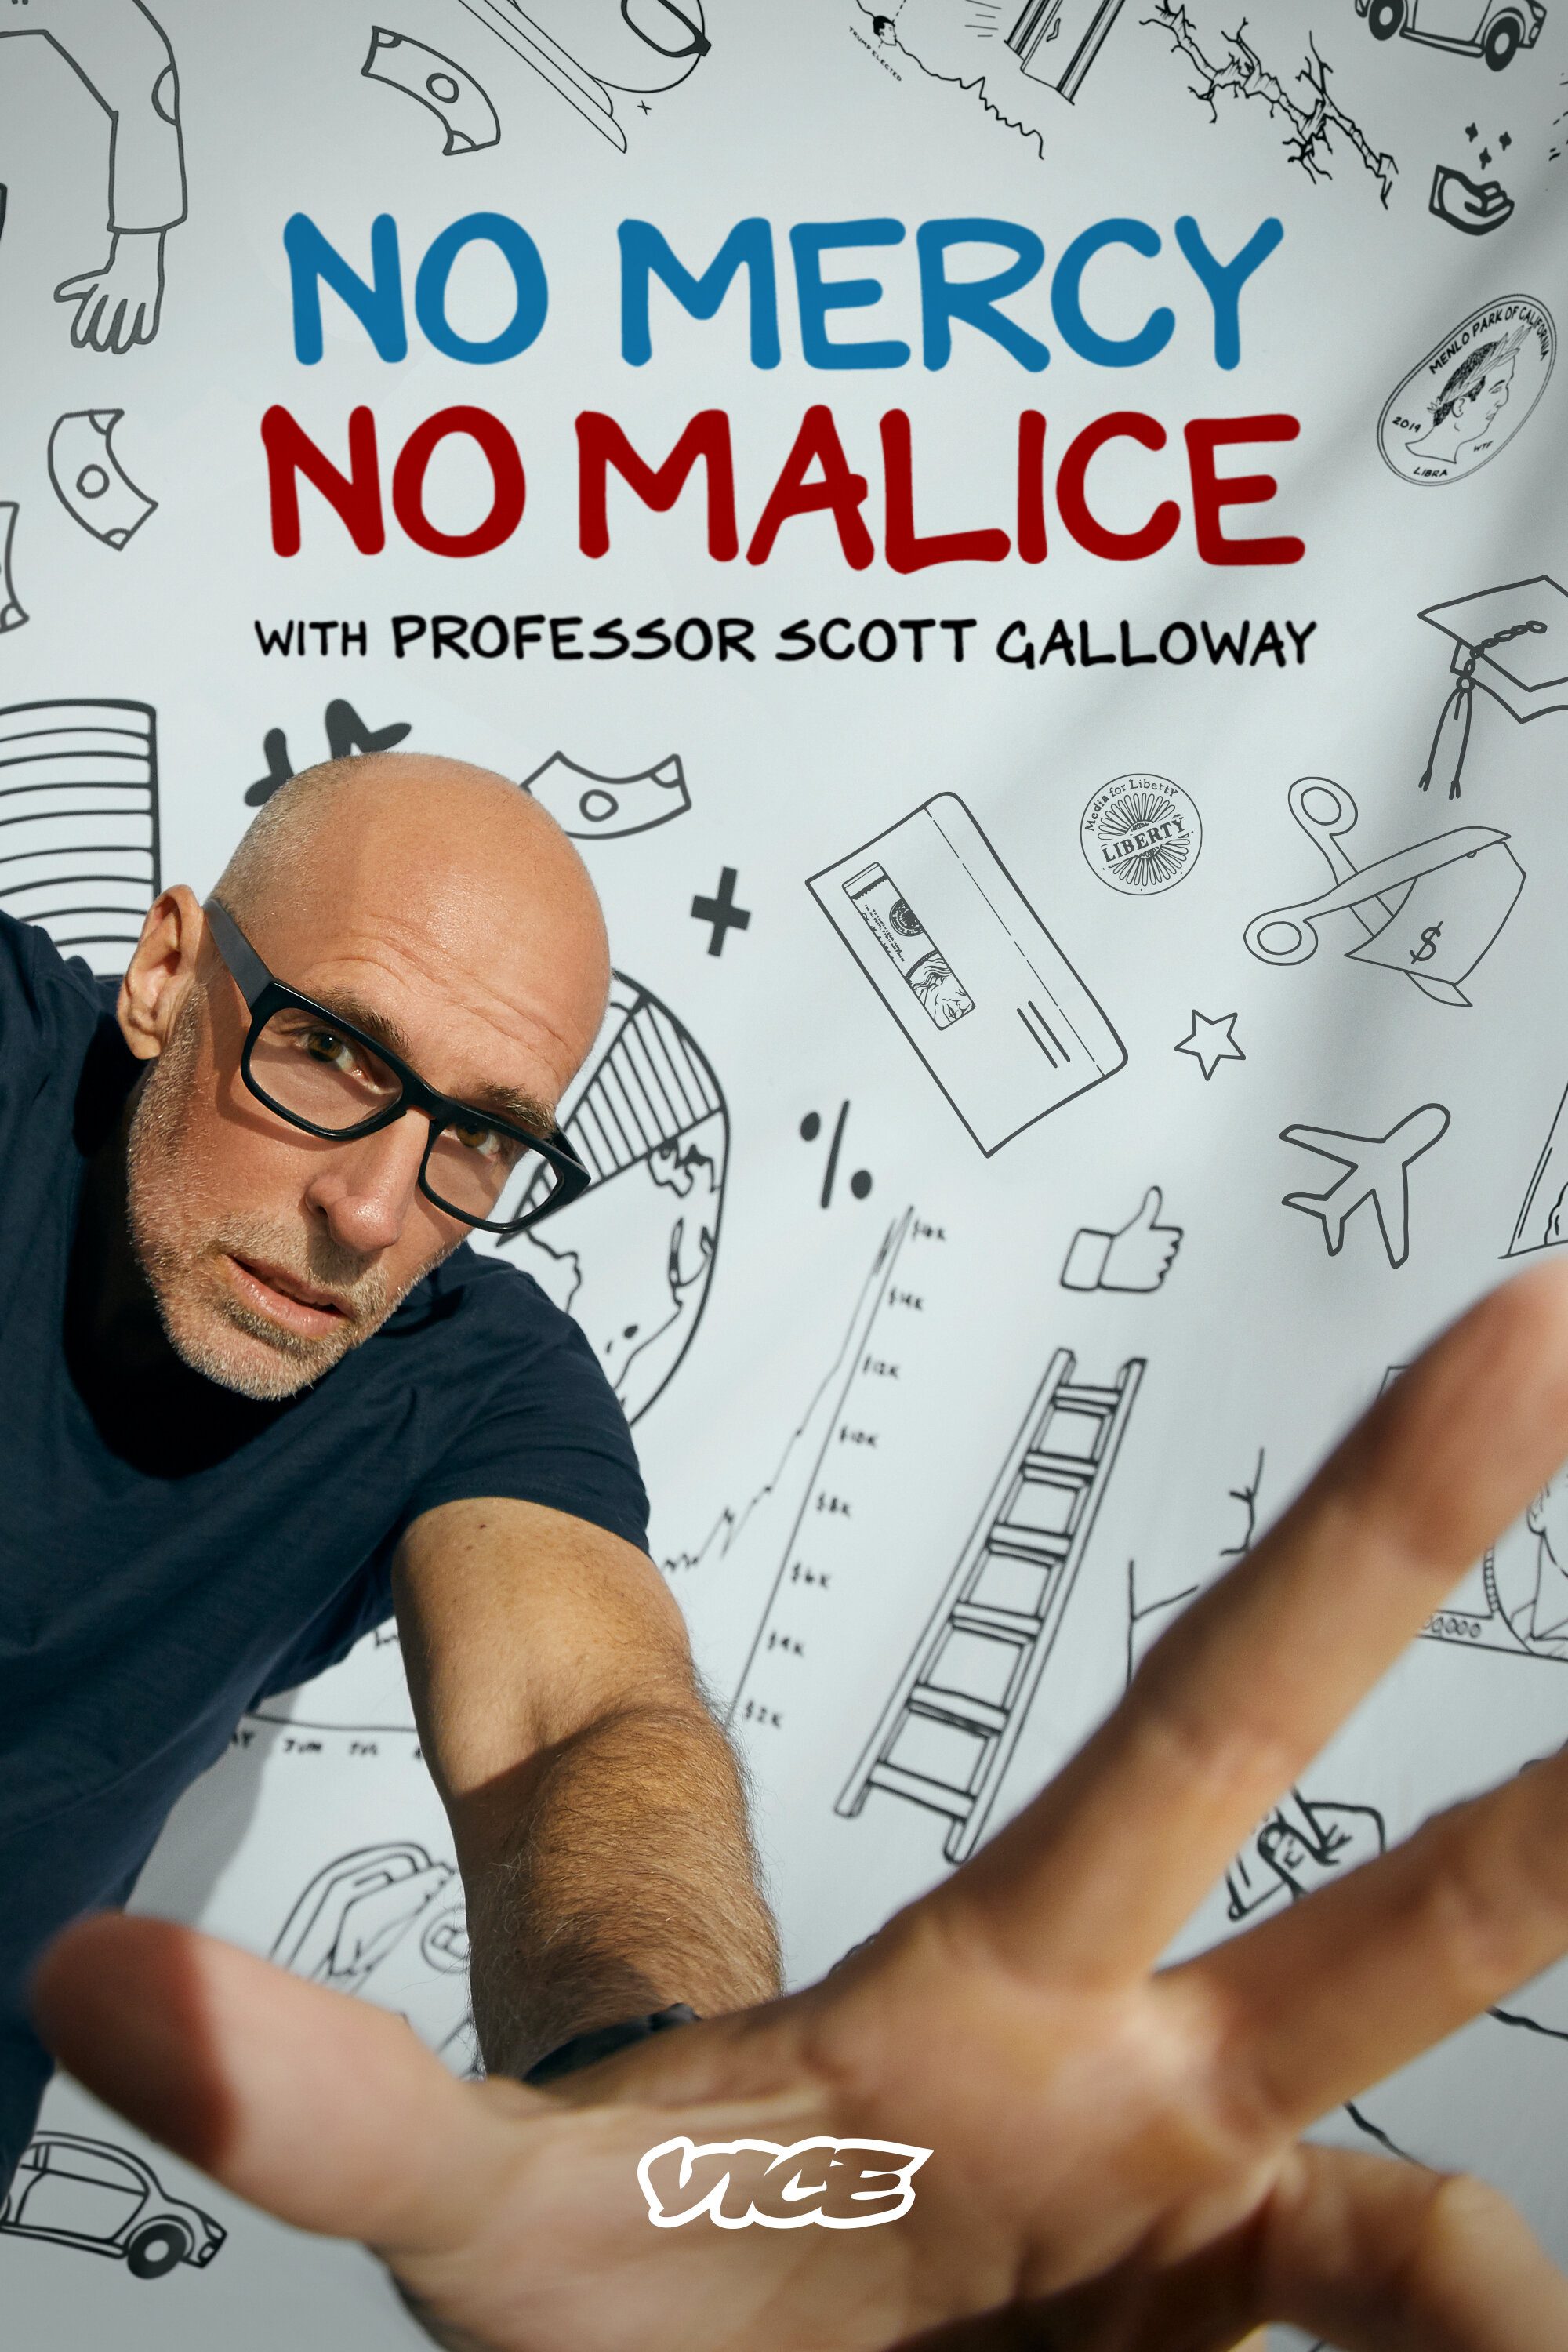 No Mercy, No Malice with Professor Scott Galloway ne zaman